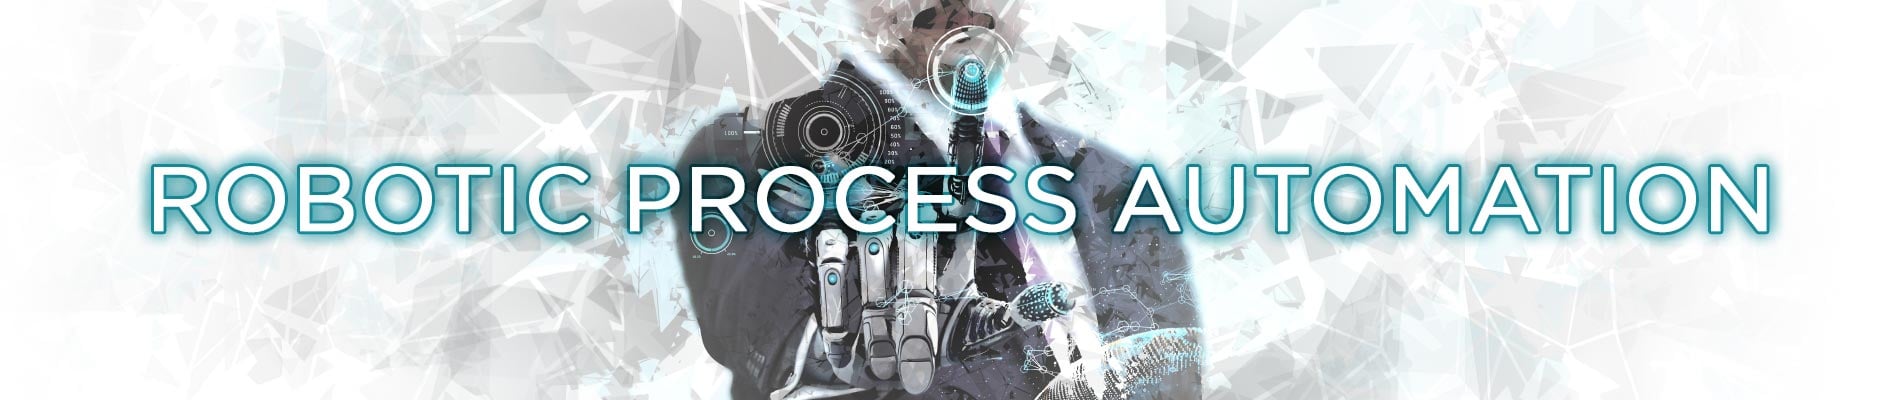 RPA - Robotic Proccess Automation 